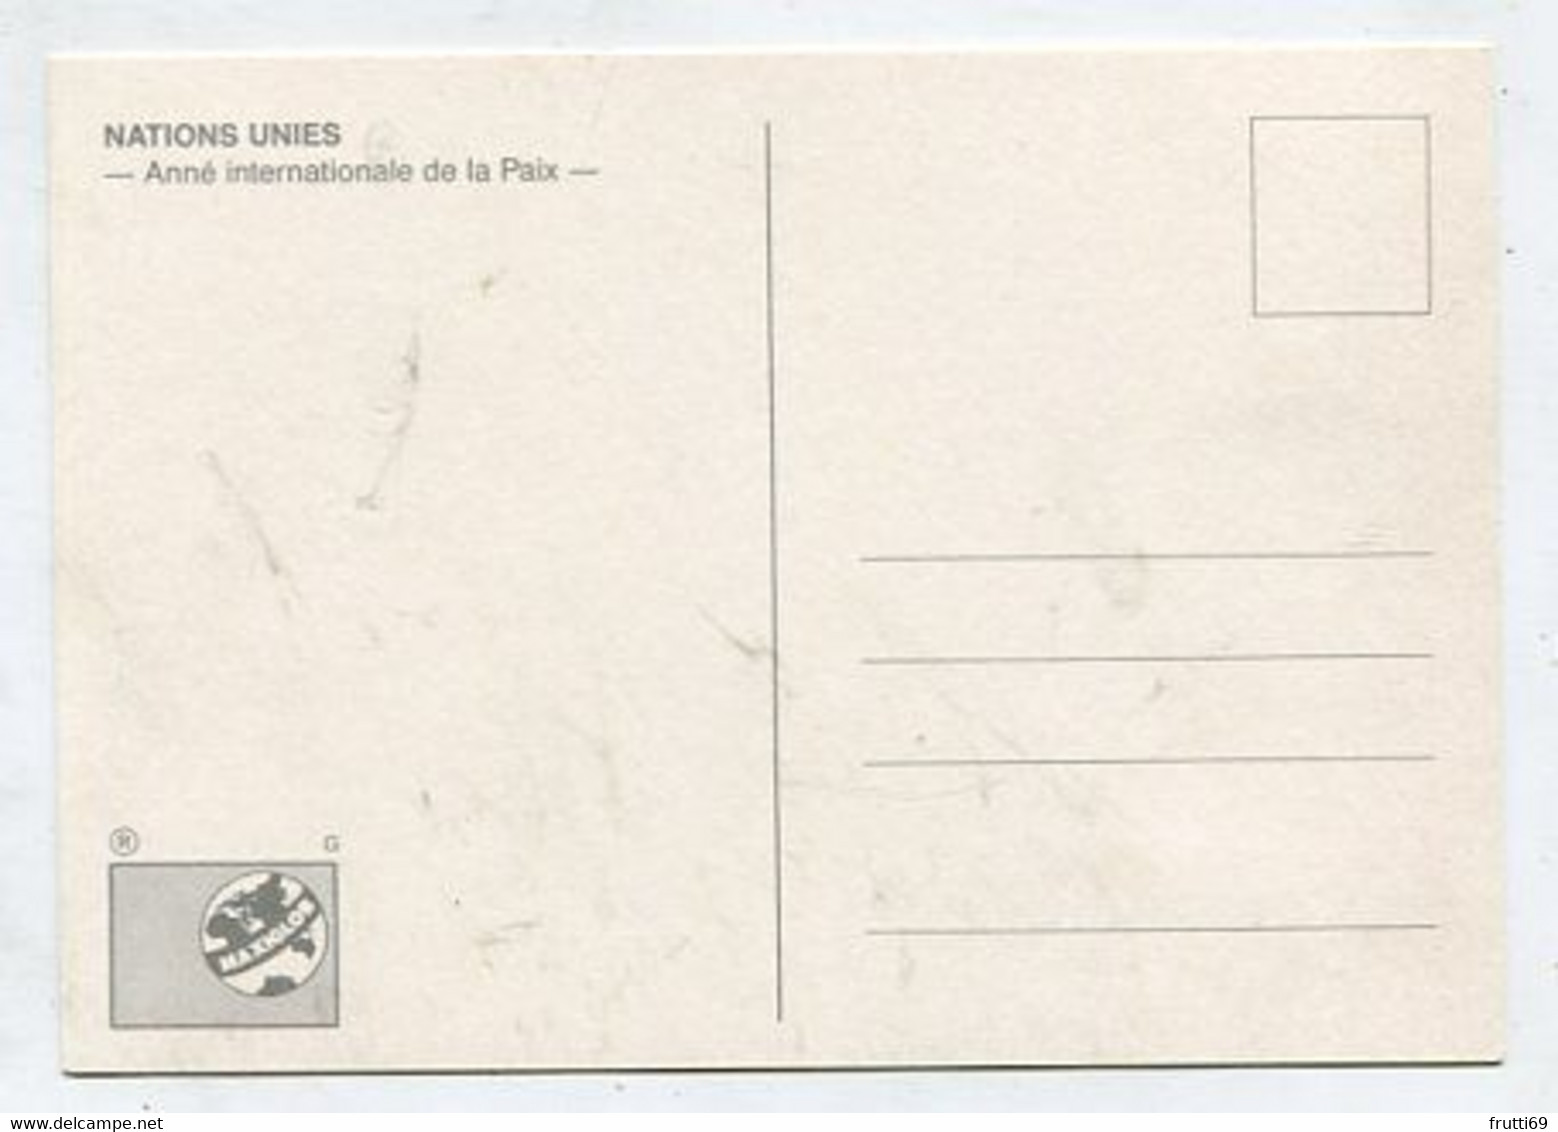 MC 076171 - UNITED NATIONS - Anné Internatioanle De La Paix - Maximumkarten